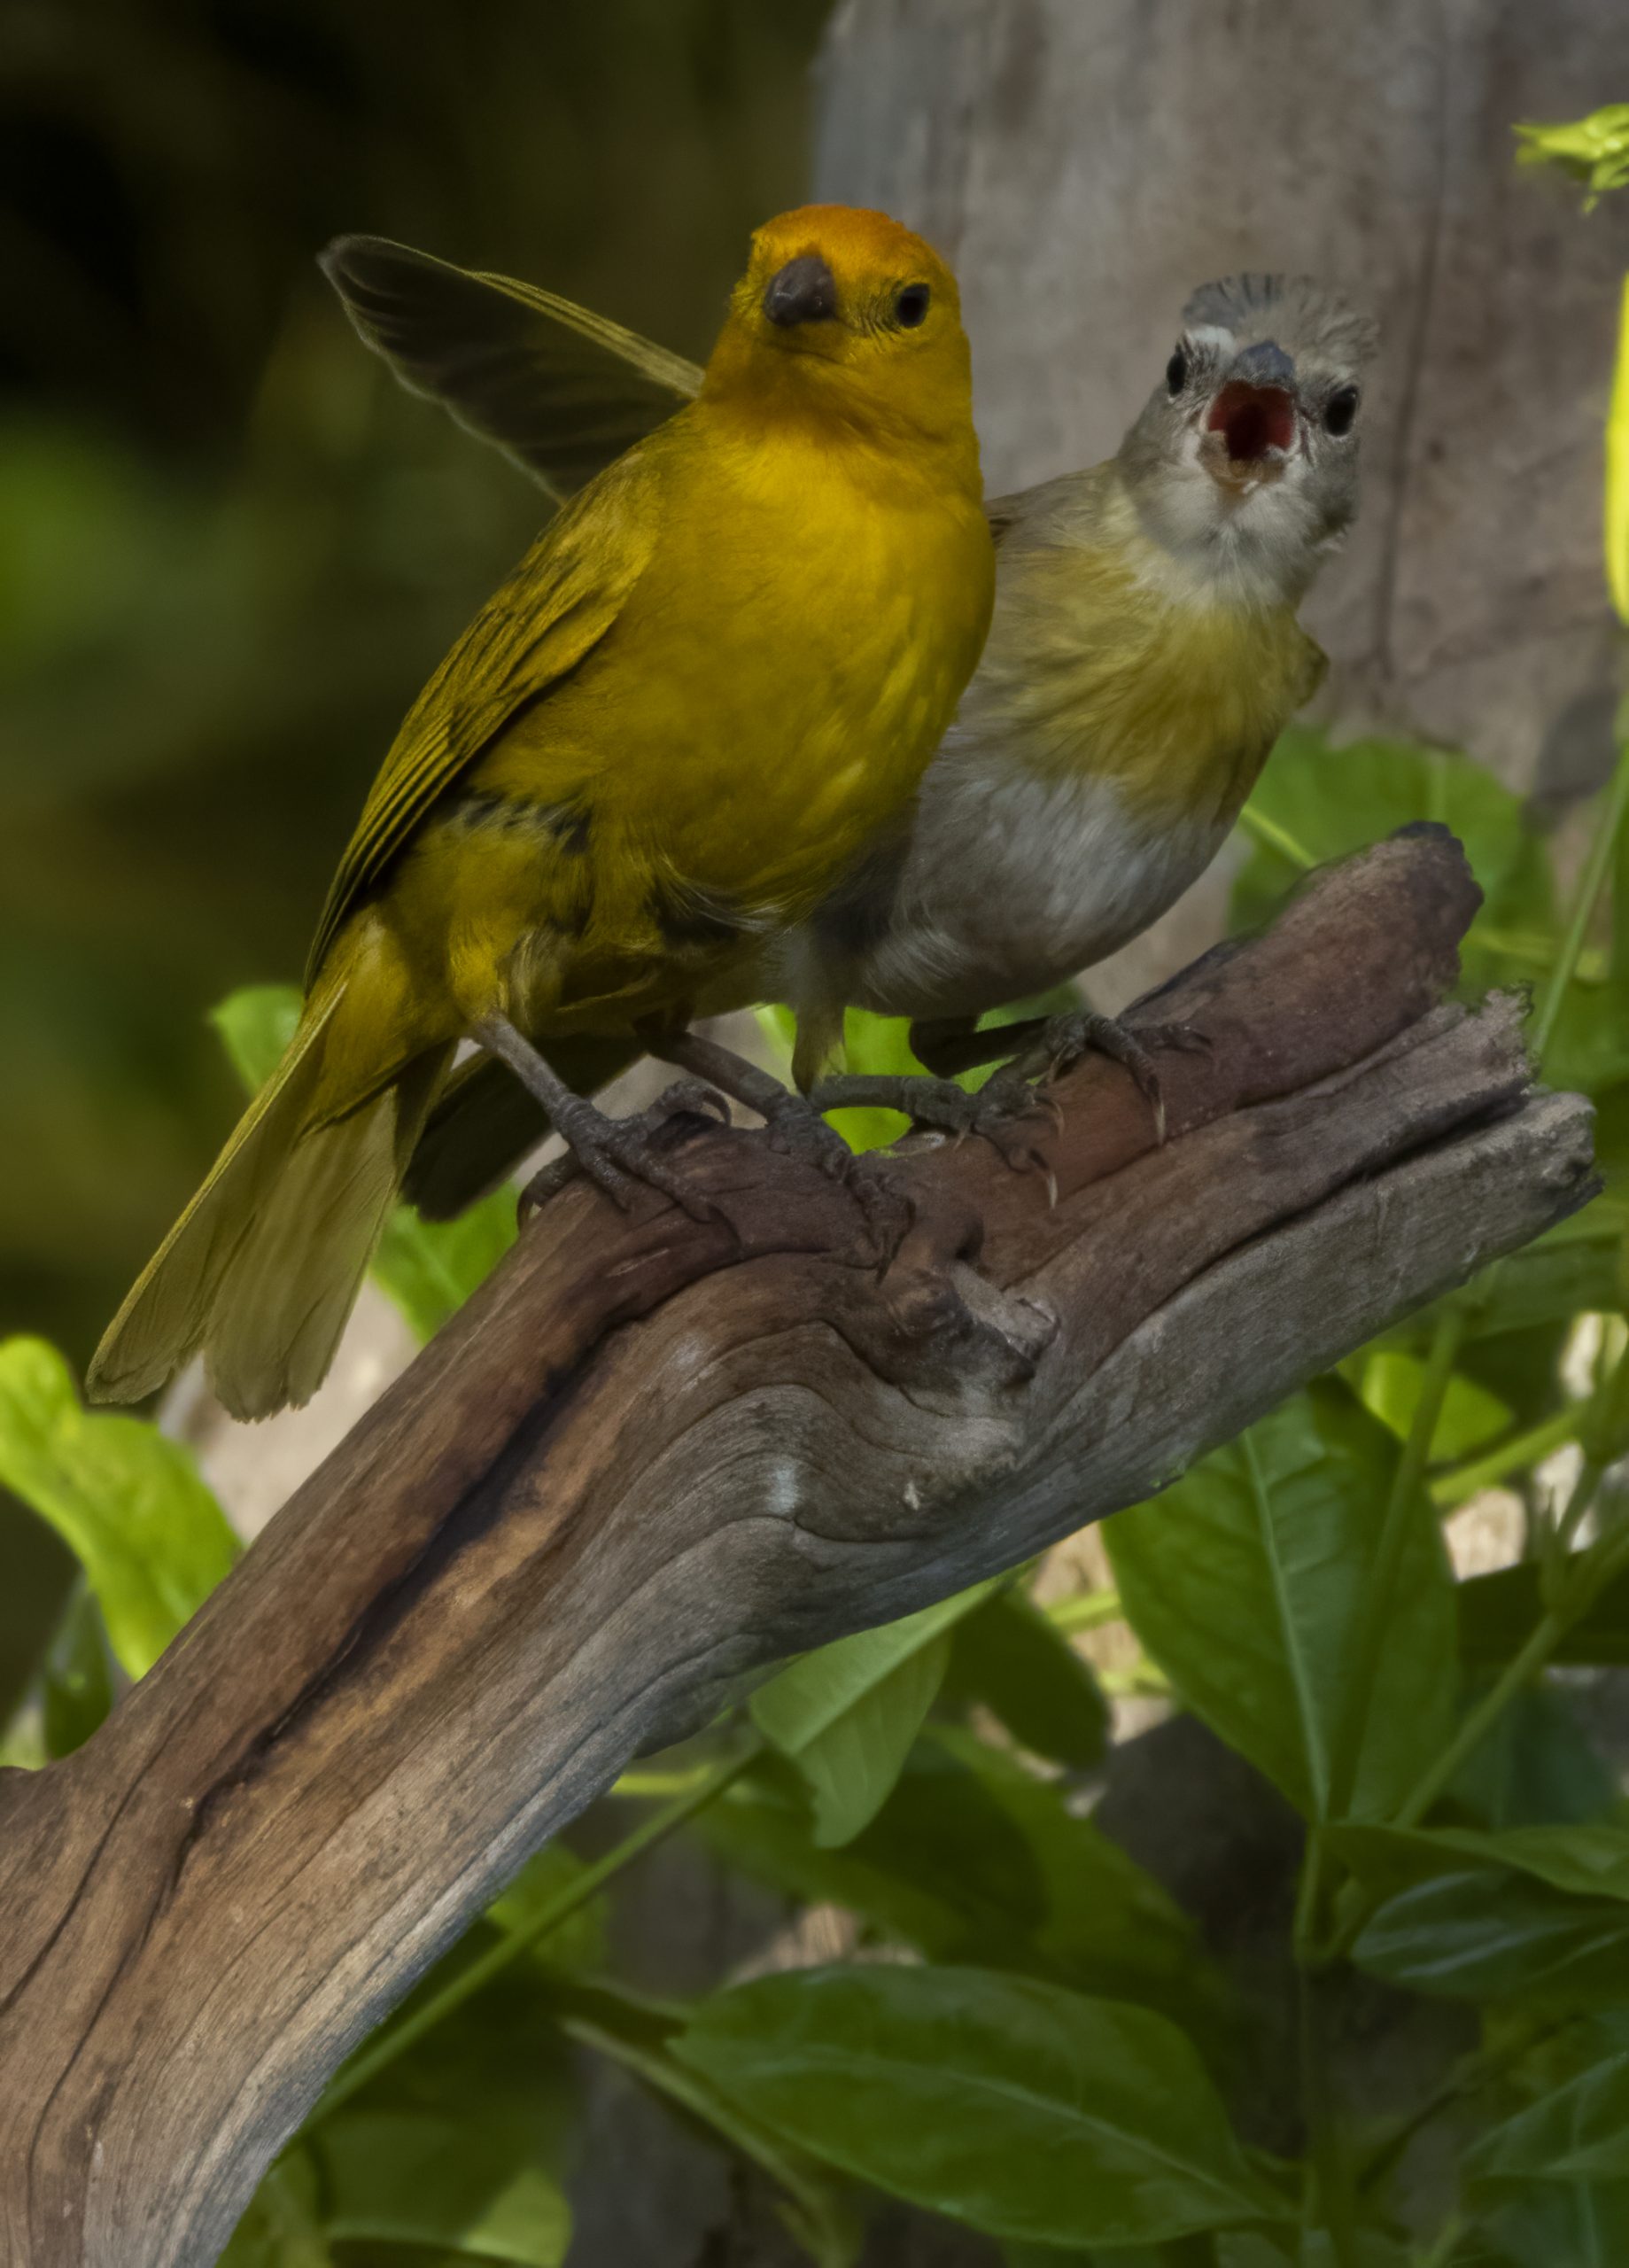 A parent Saffron Finch brings its fledgling to the garden.